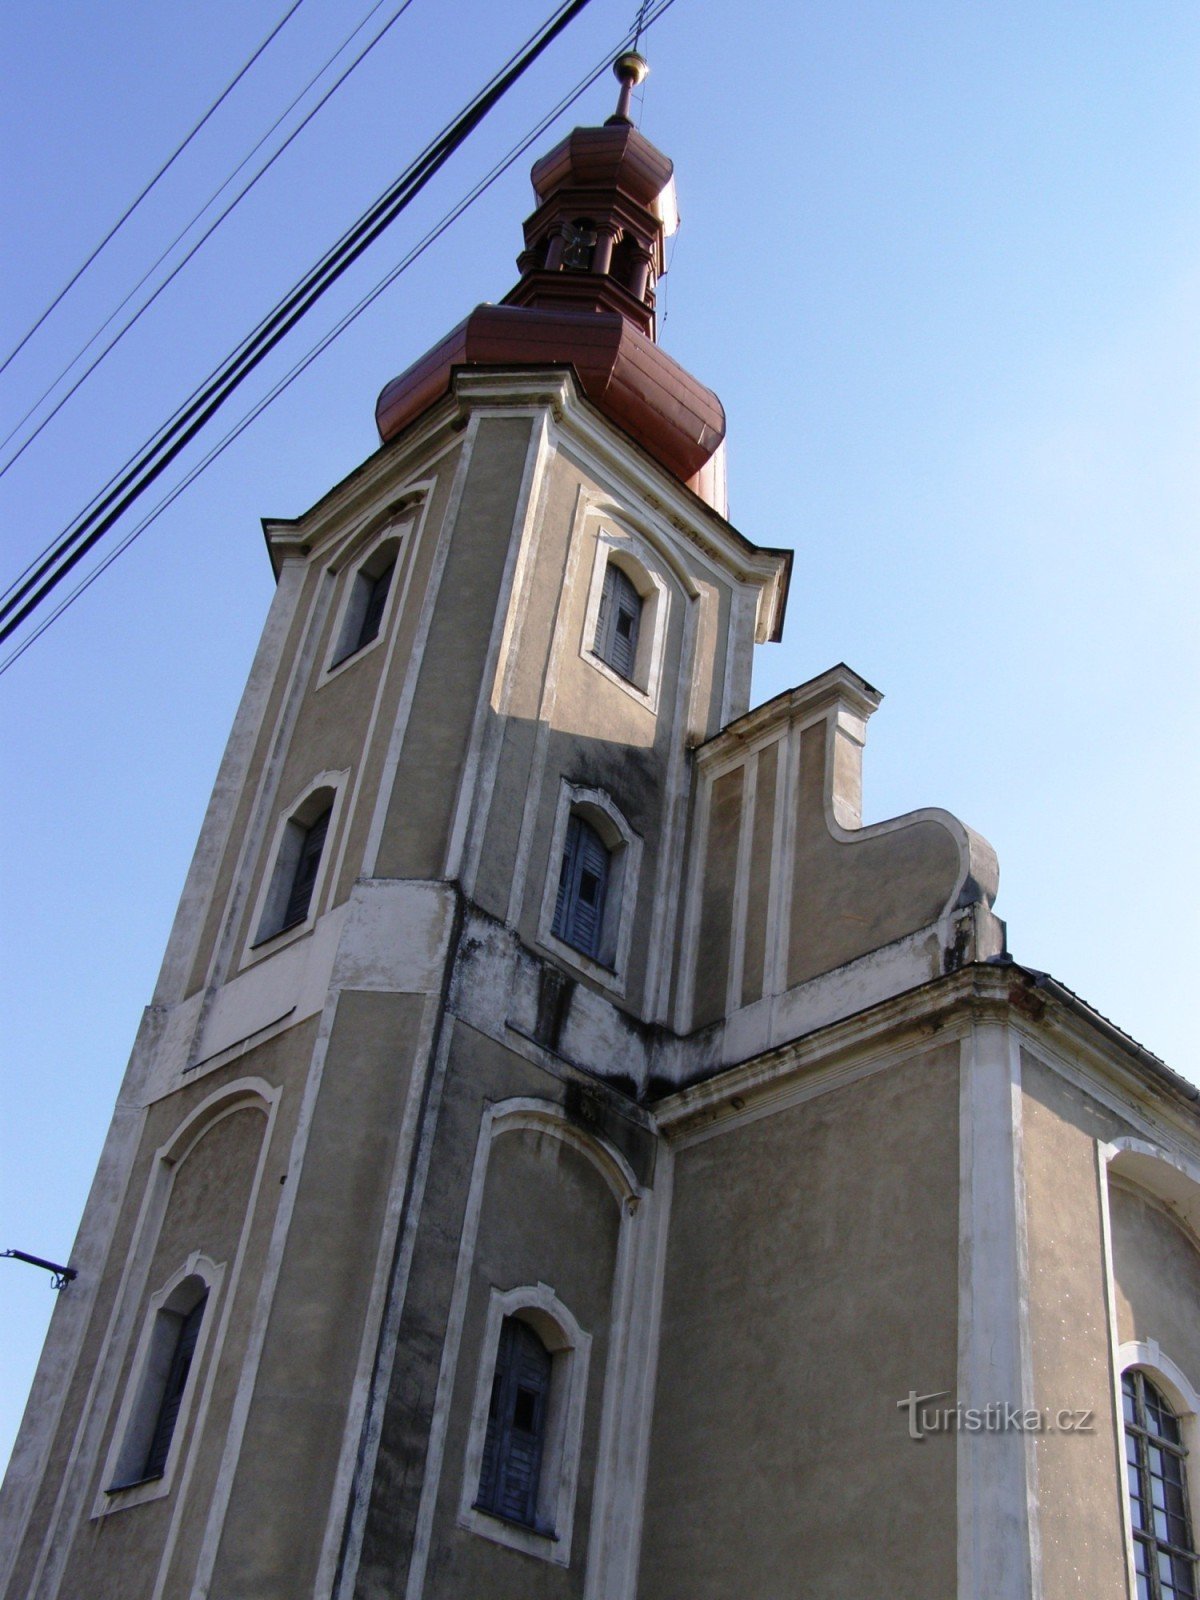 Domašov - Church of St. Tomas